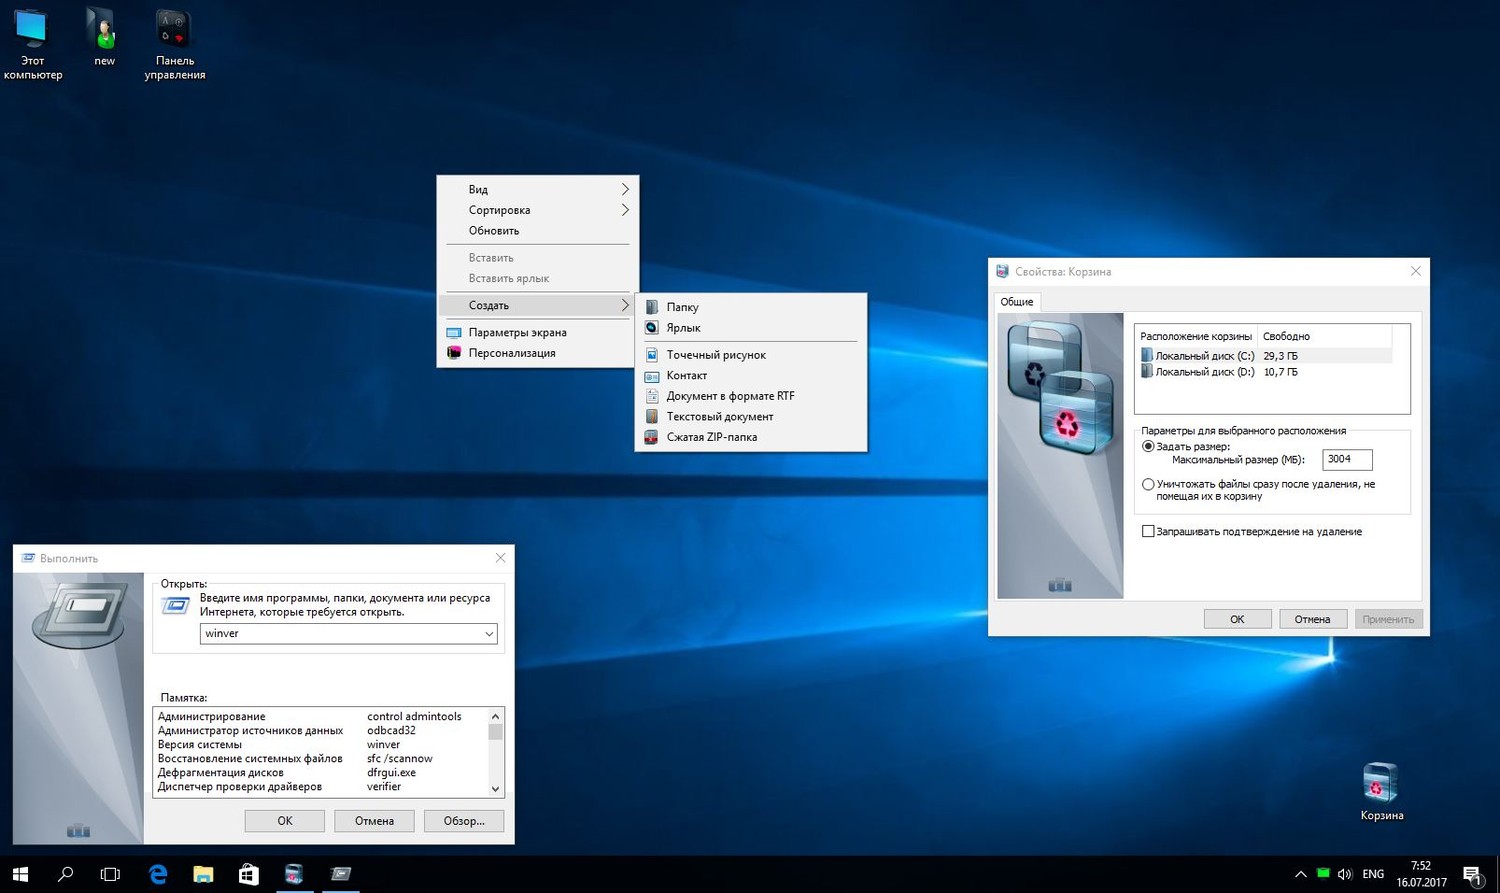 Windows 10 32/64бит корпоративная LTSB 14393.223 V.85.16. Обновление версия 32